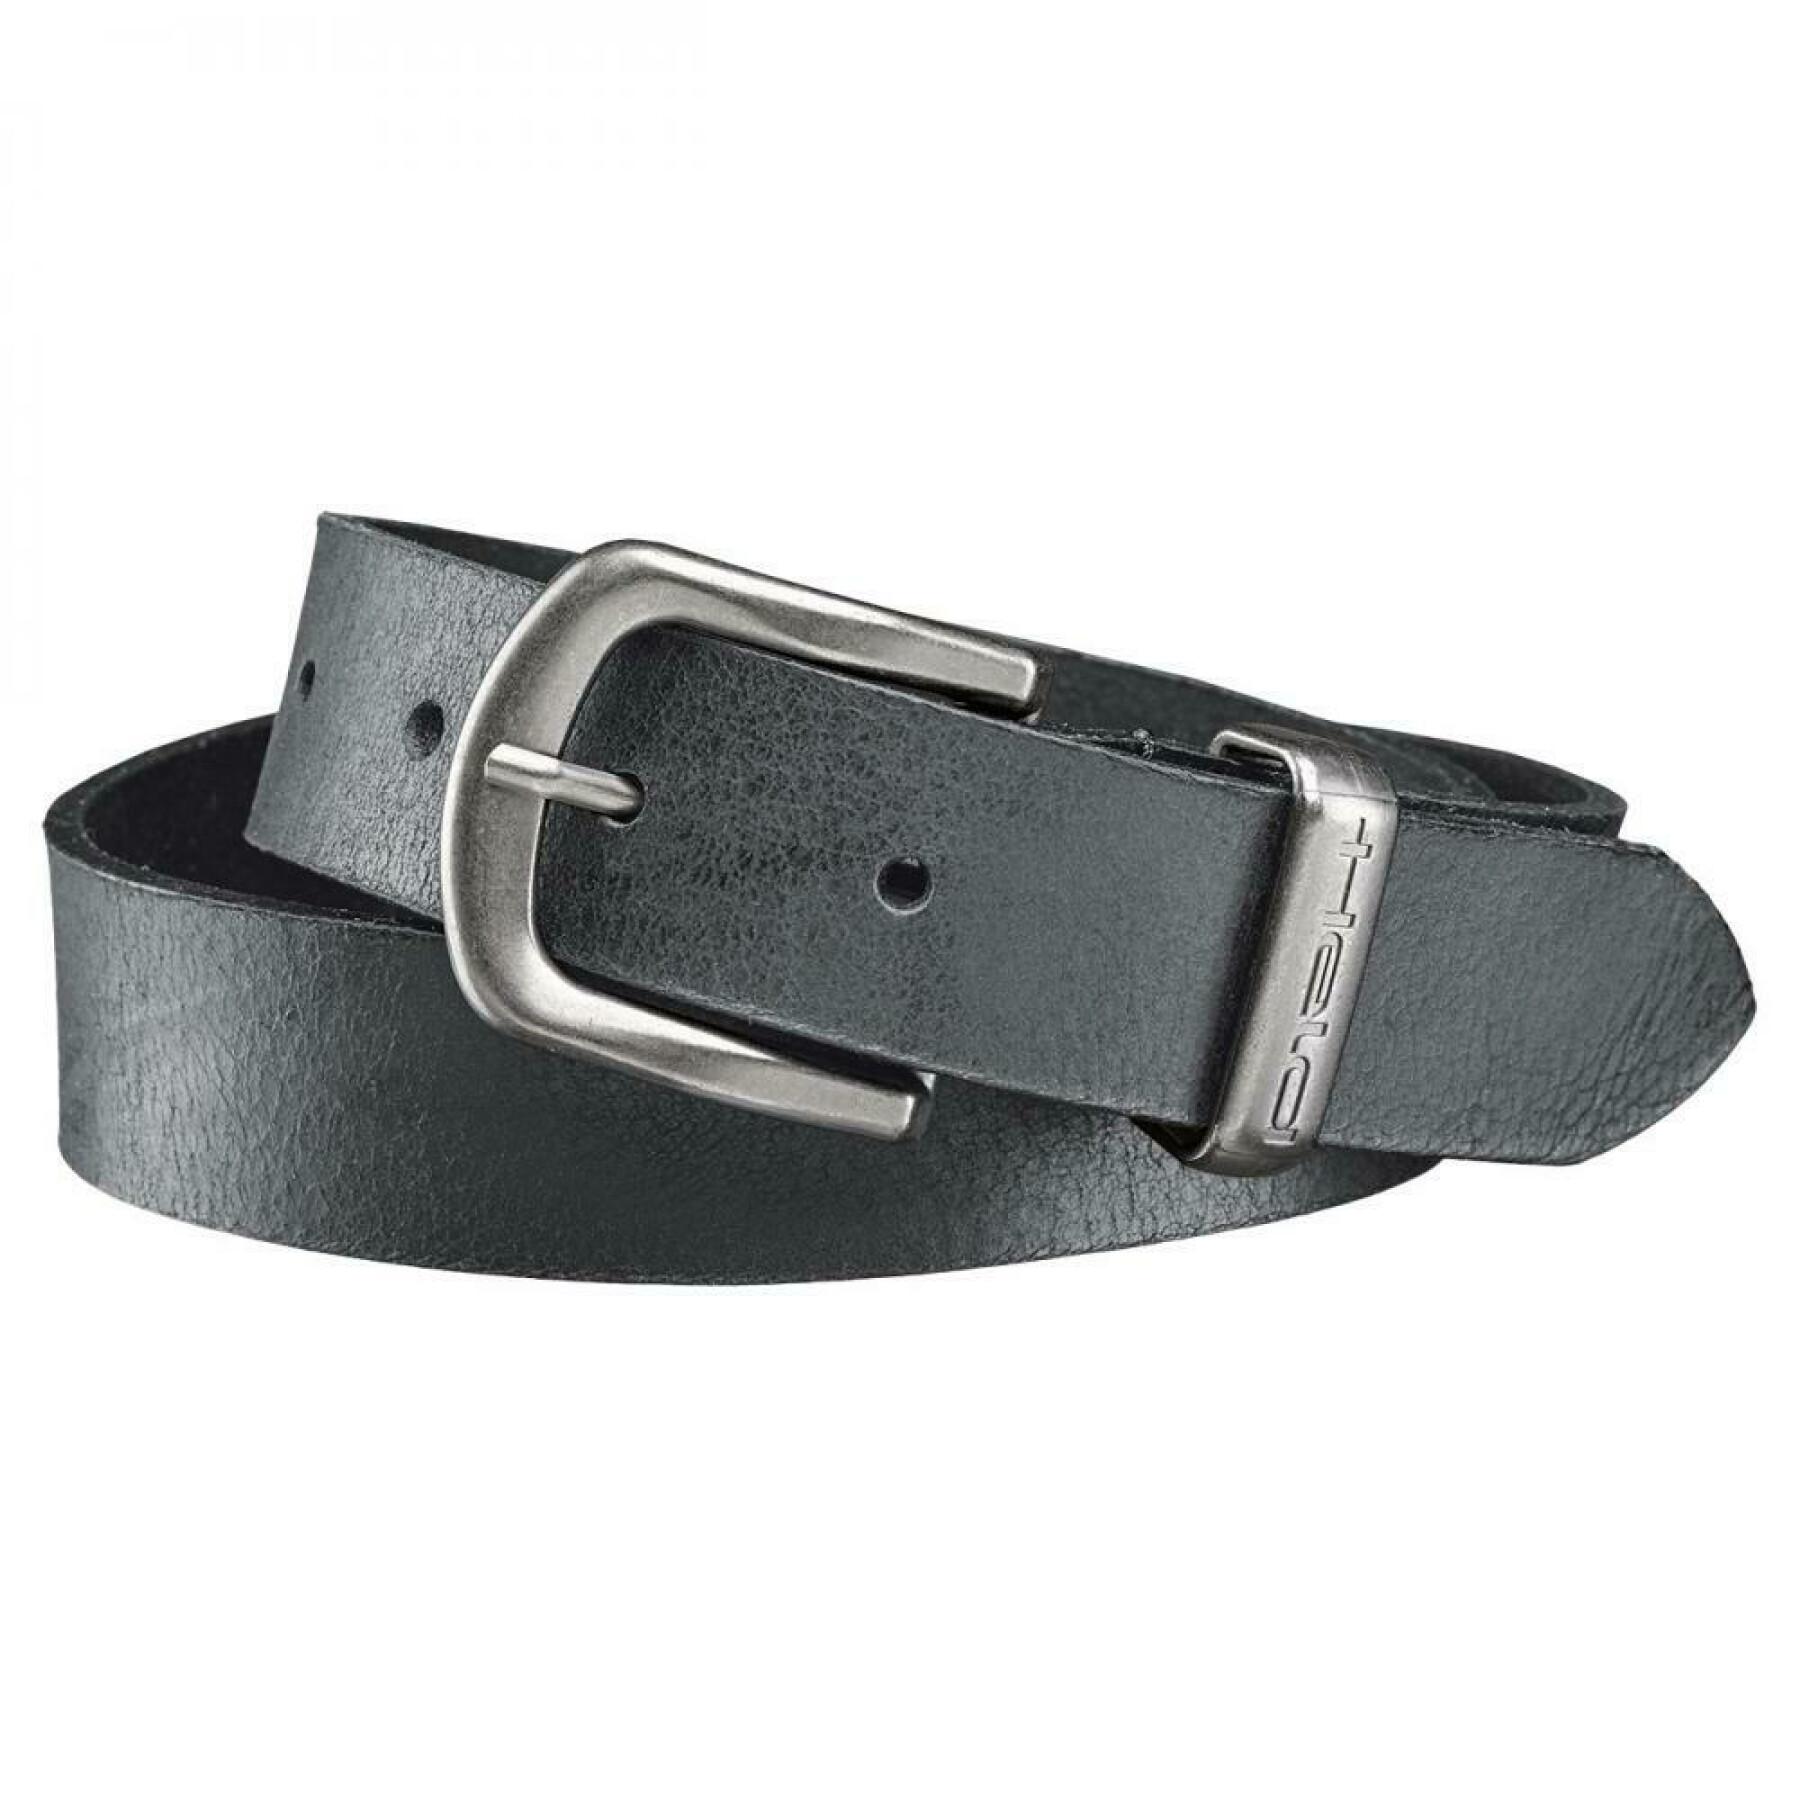 Leather belt for women Held